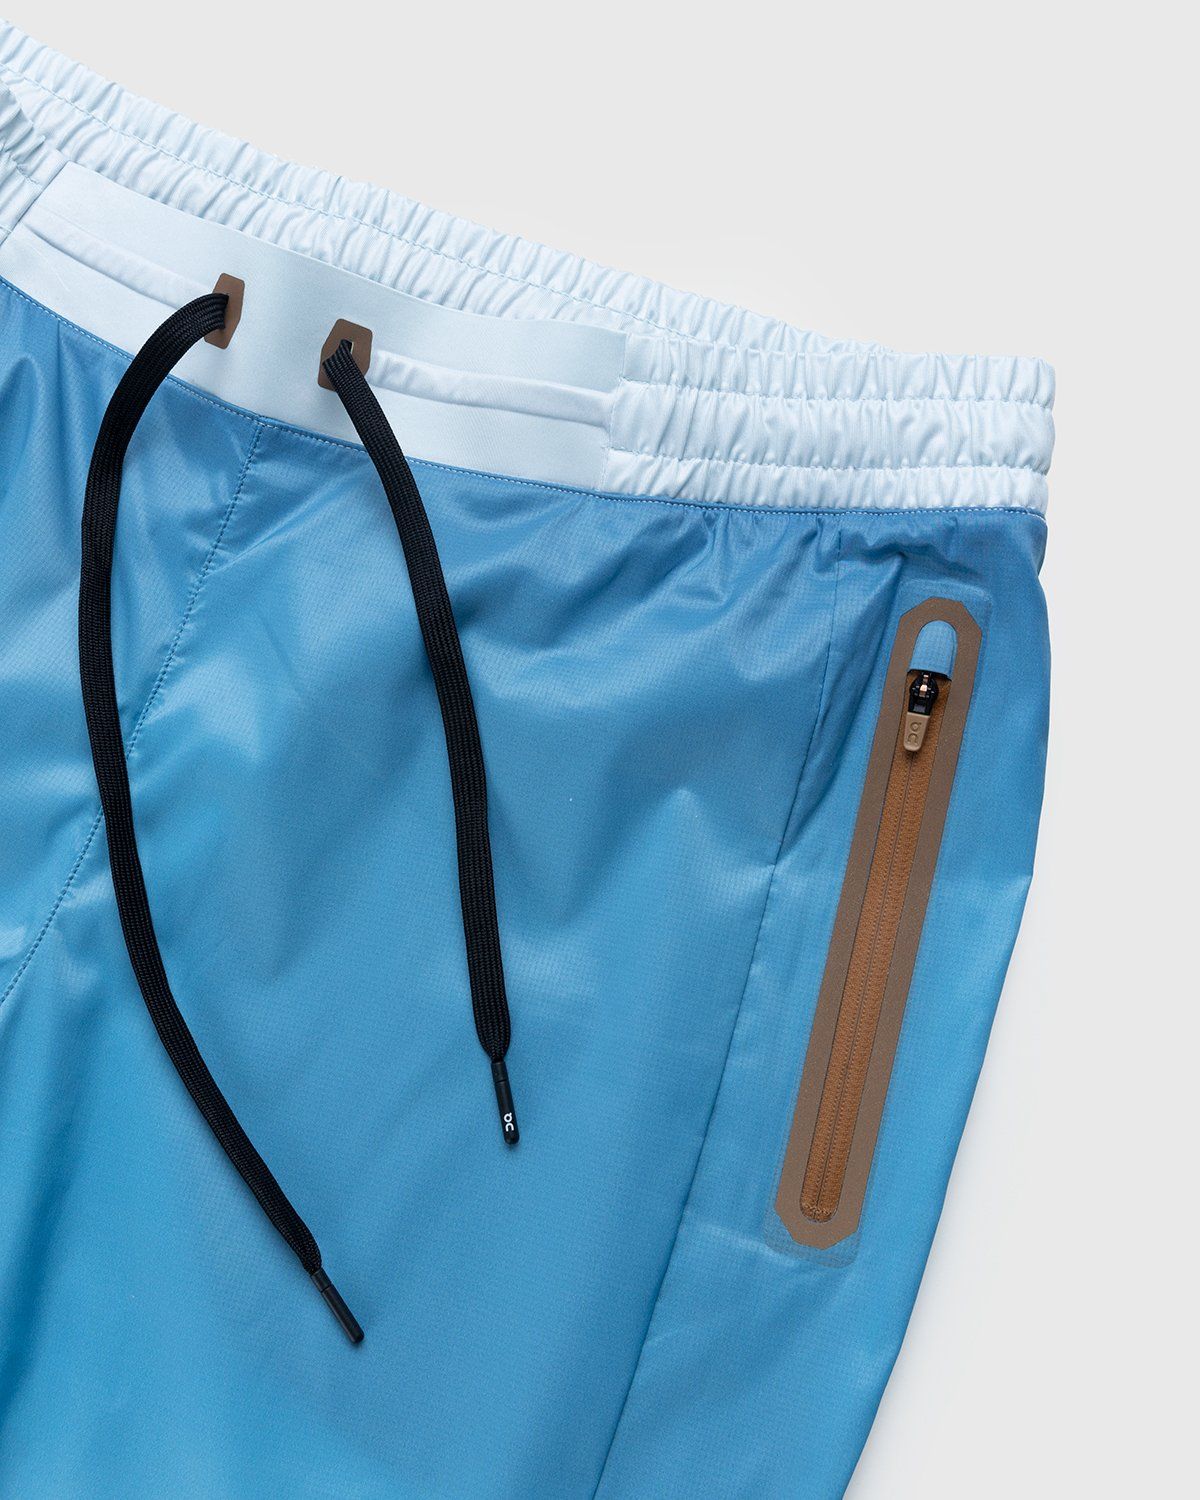 Loewe x On – Men's Technical Running Pants Gradient Grey - Pants - Blue - Image 5